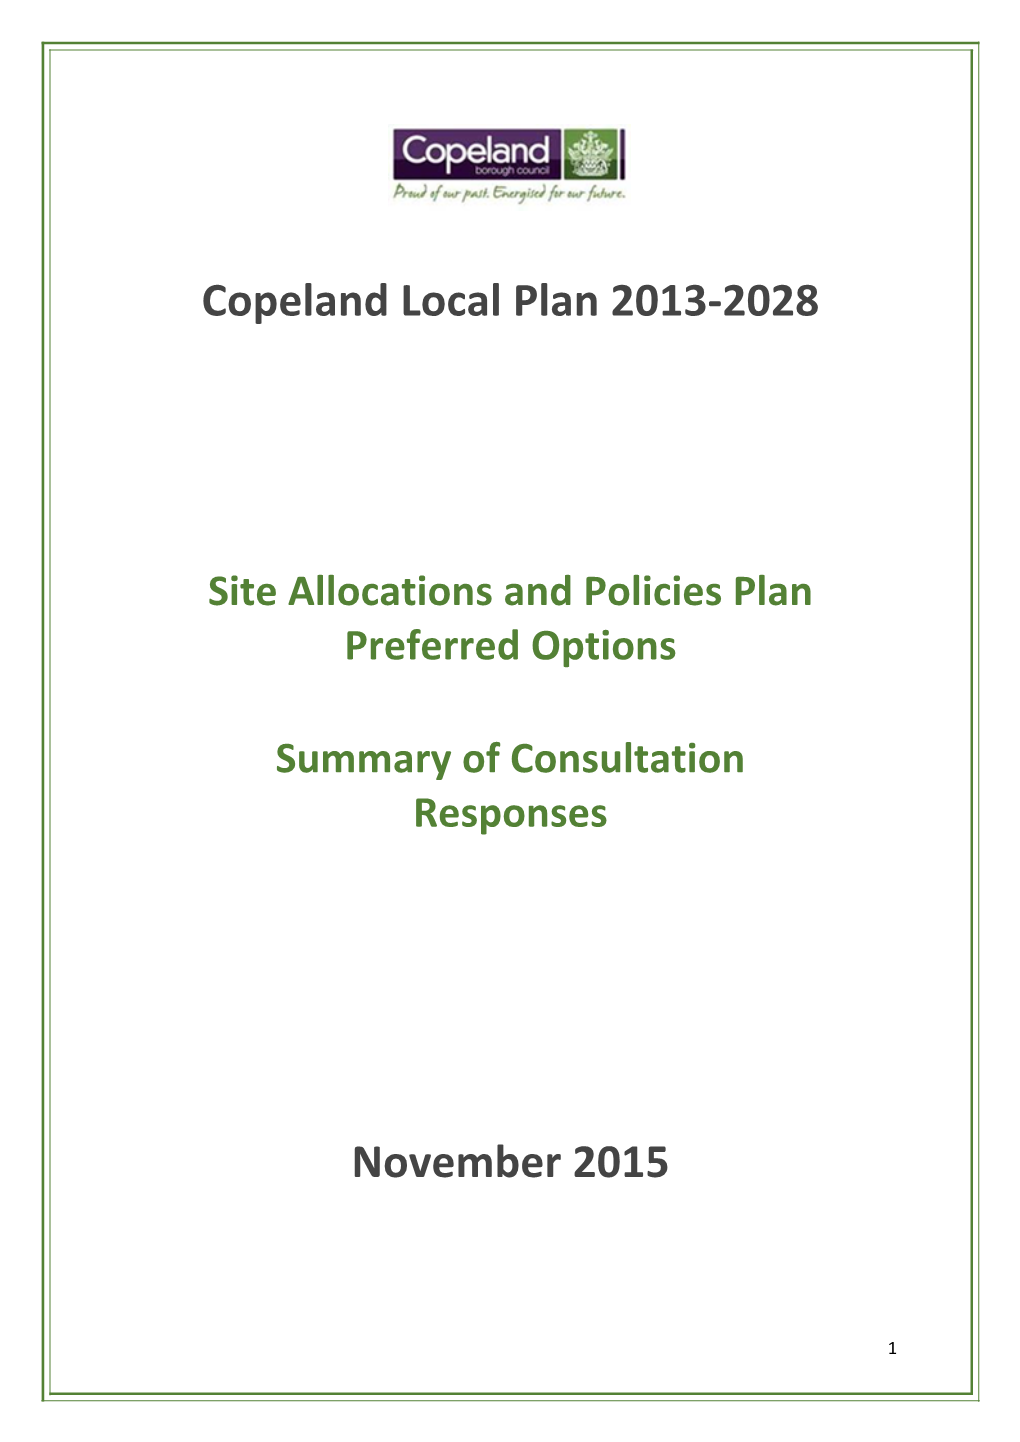 Copeland Local Plan 2013-2028 November 2015